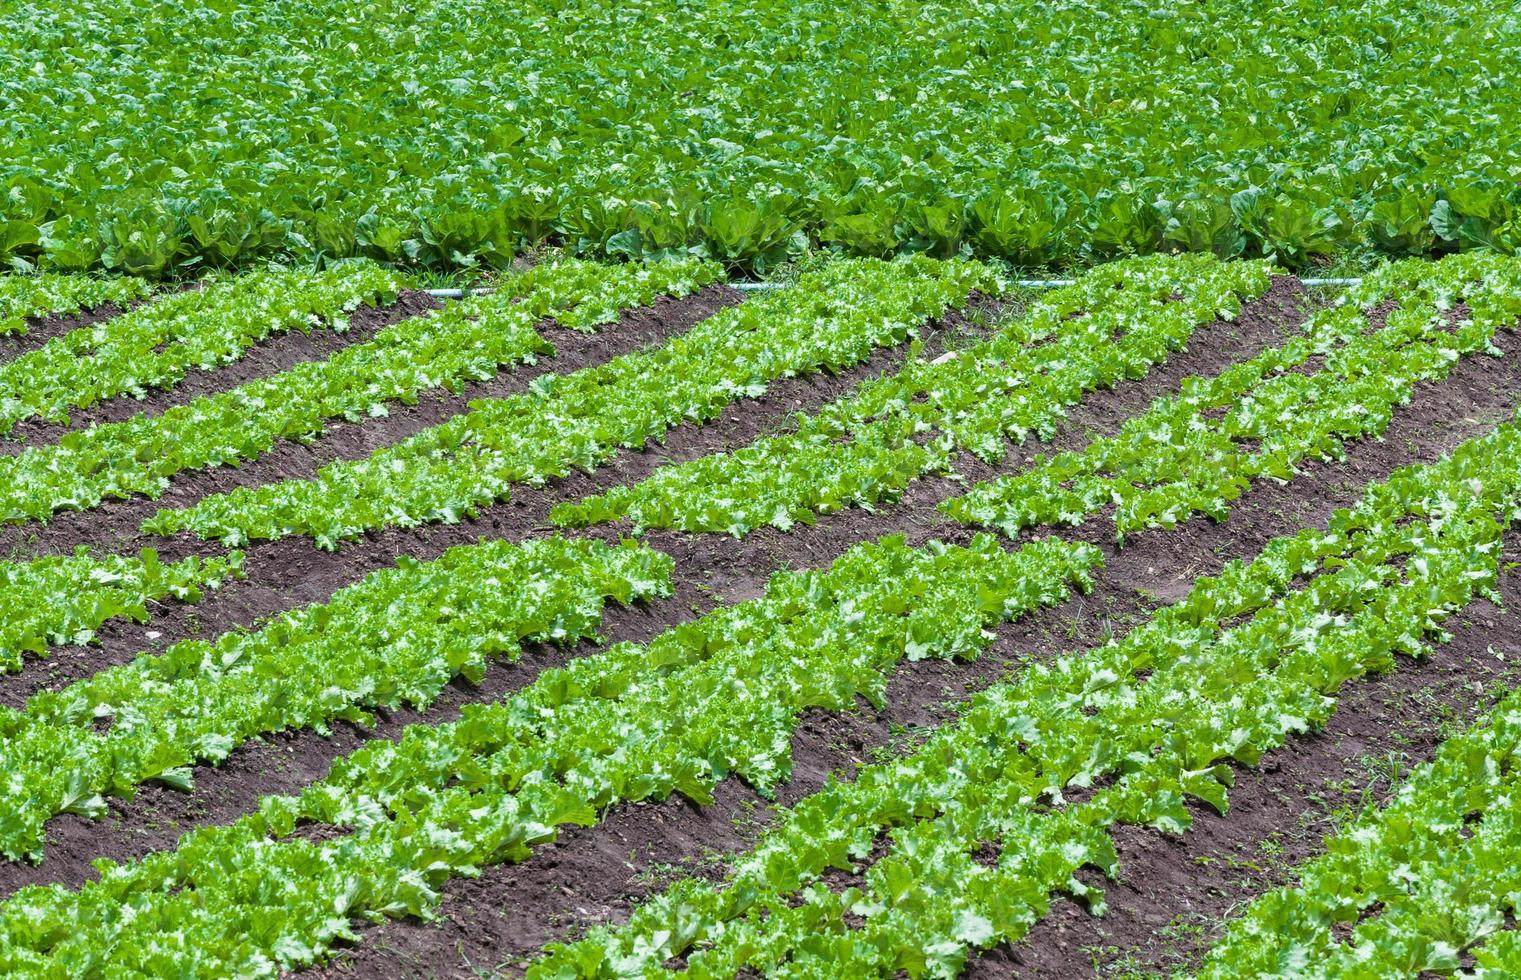 fresco insalata verde biologico azienda agricola giardino crescita giovane insalata il verdura foto